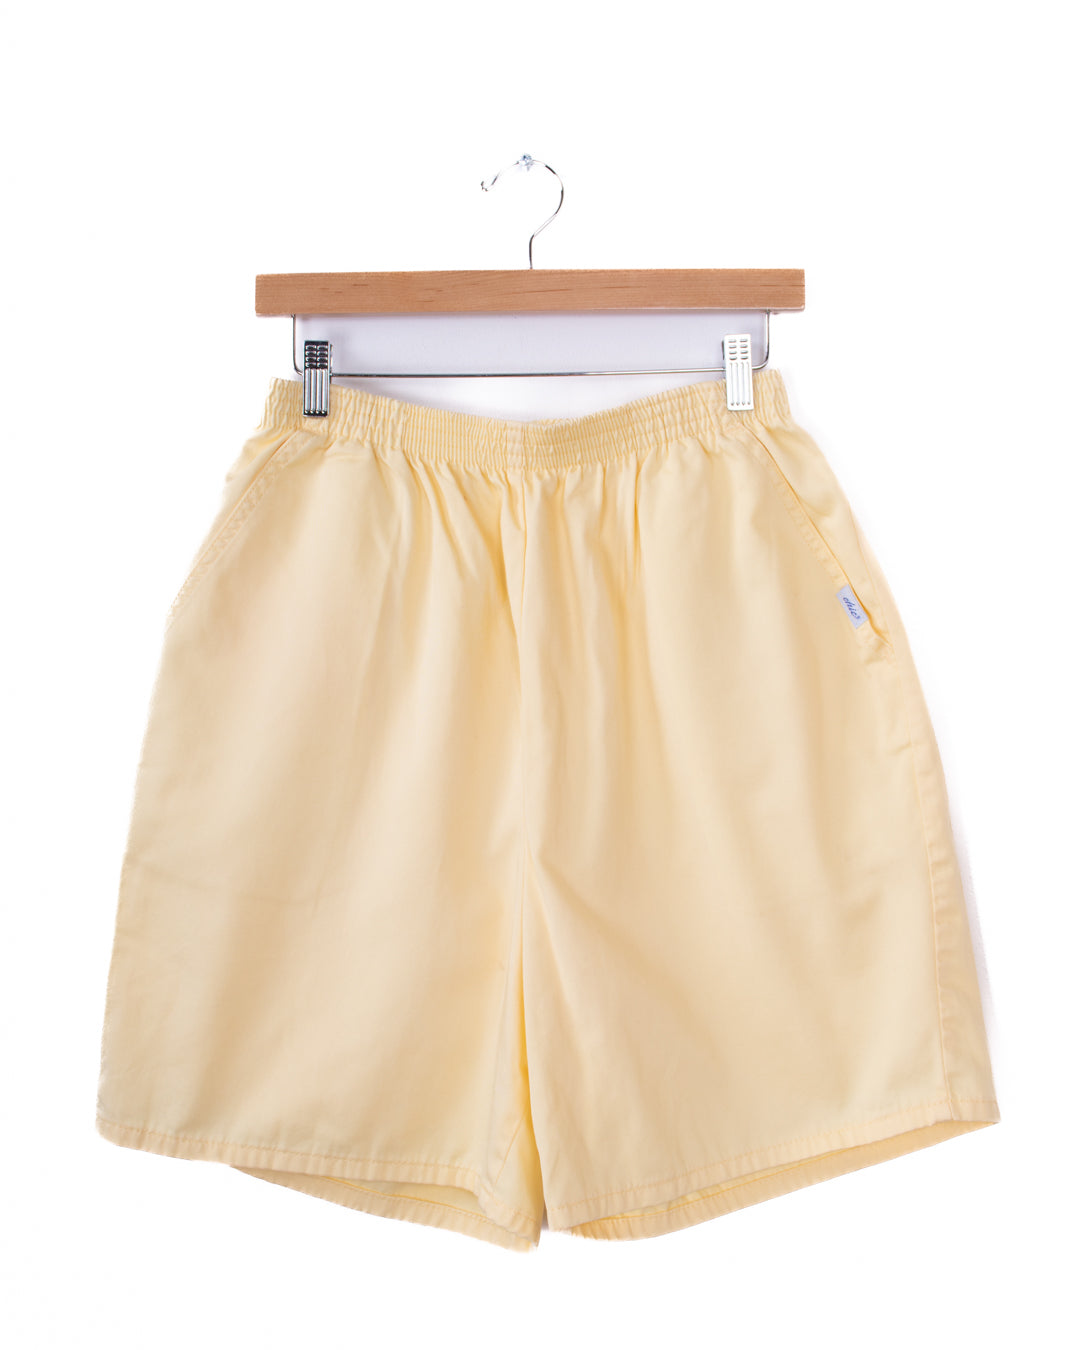 Chic Pale Yellow Elastic Waist Shorts